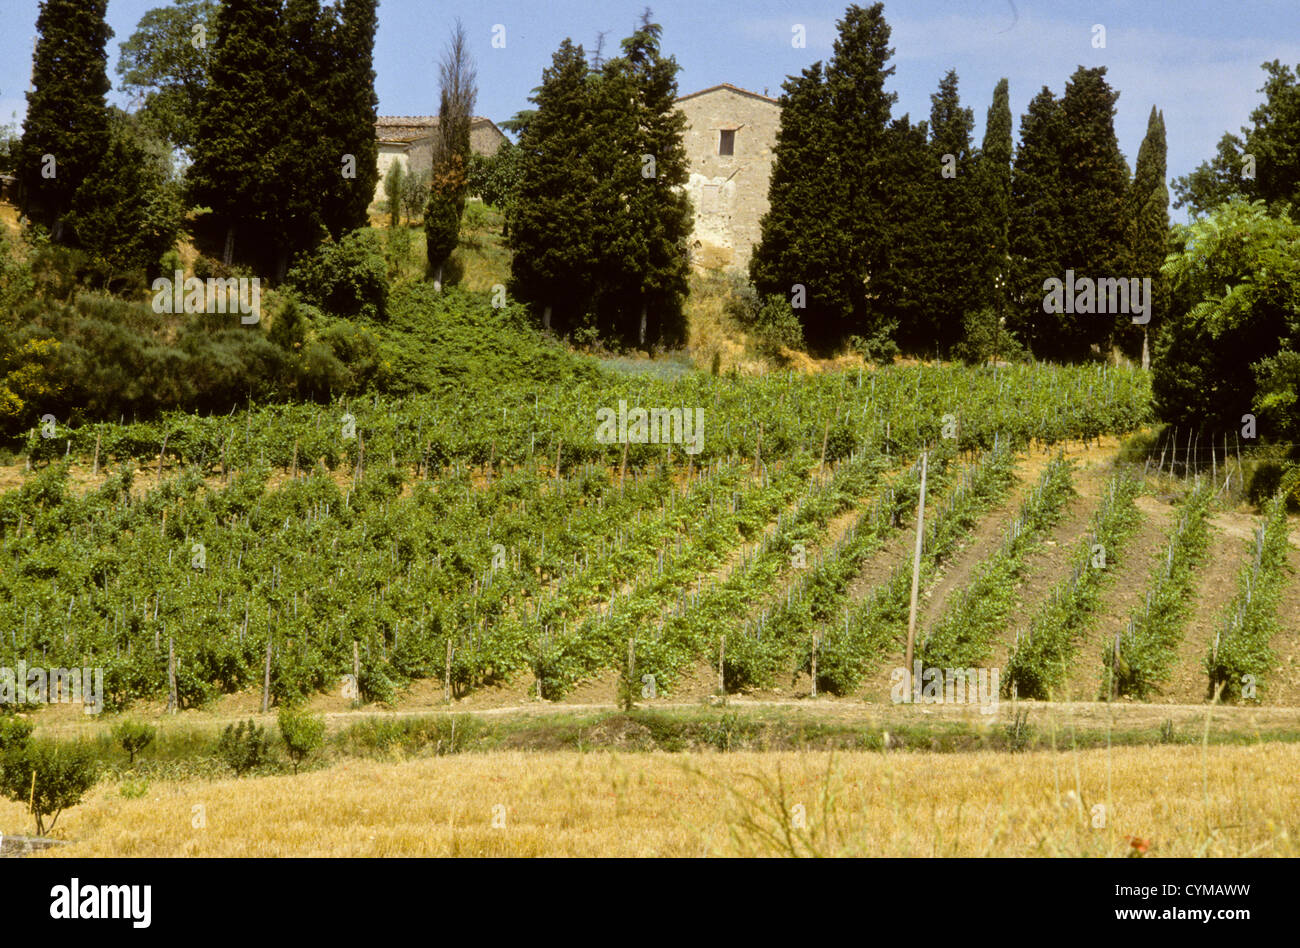 Hilltop Towns Villages Ancient Roman Remains Agriculture Wine Growing